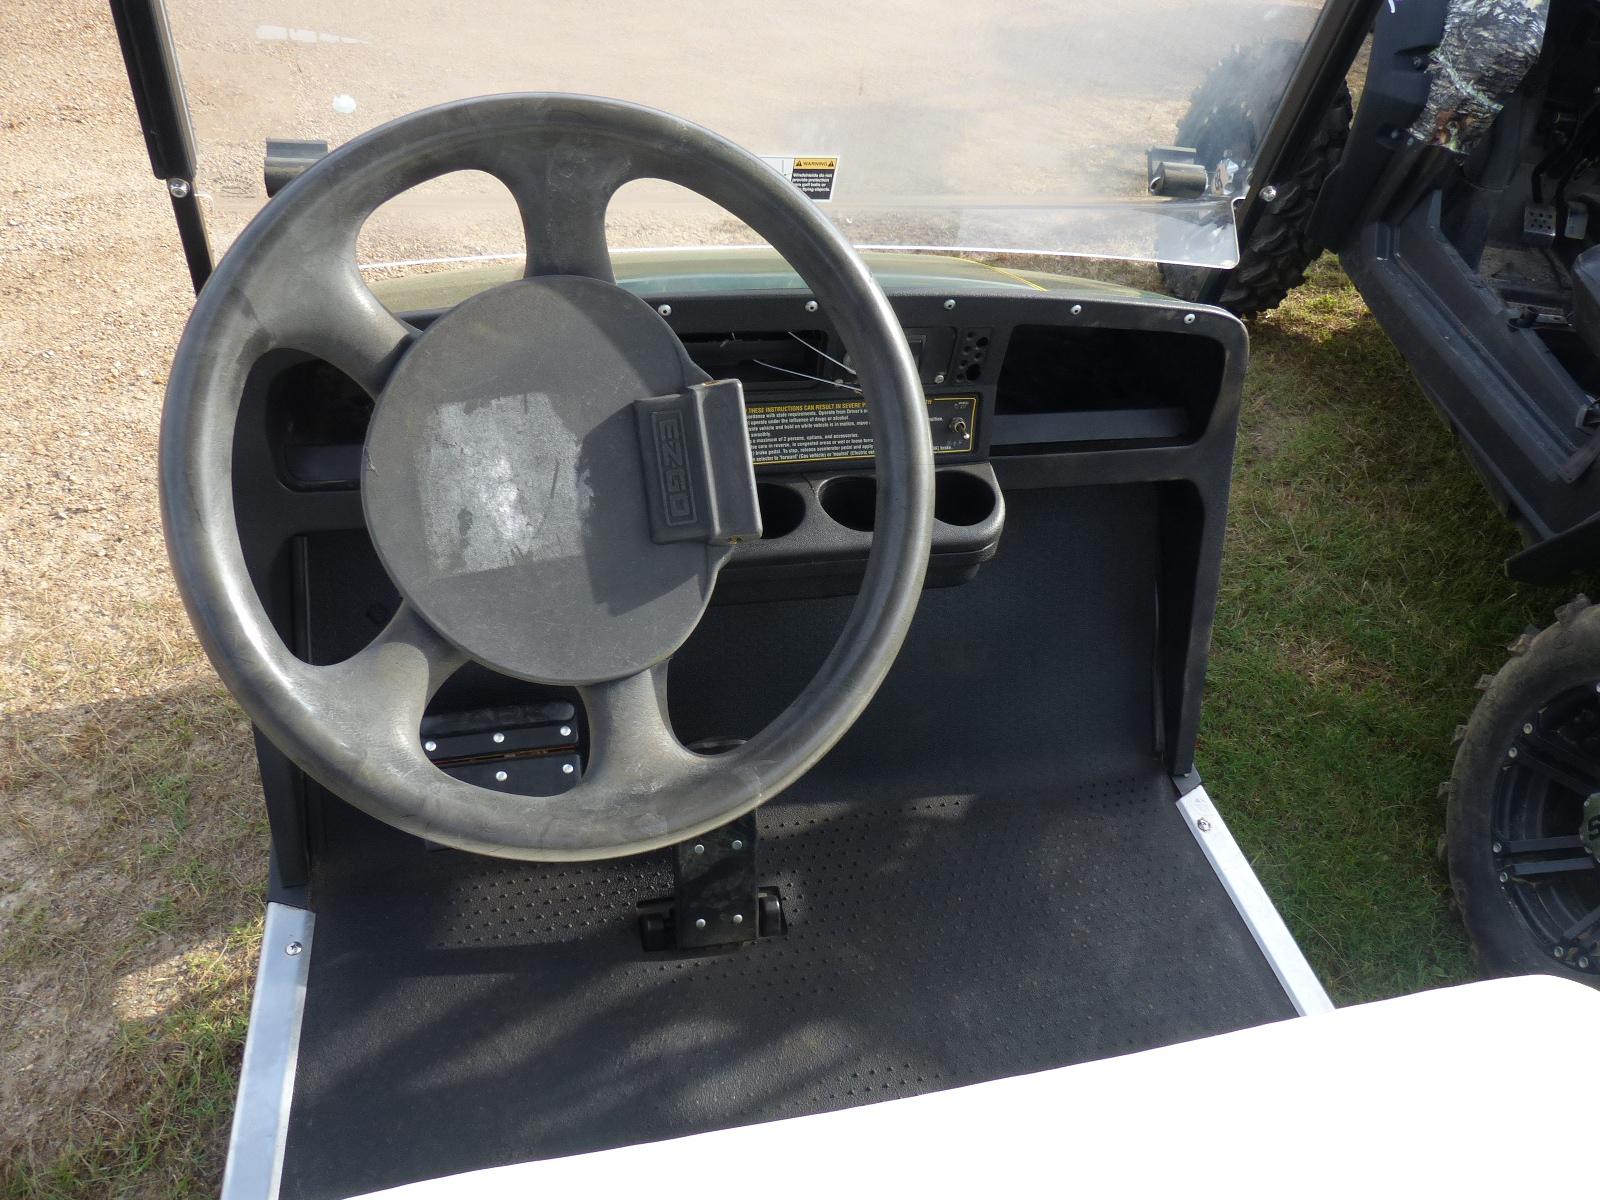 EZGo Electric Golf Cart, s/n 2618030 (No Title): 36-volt